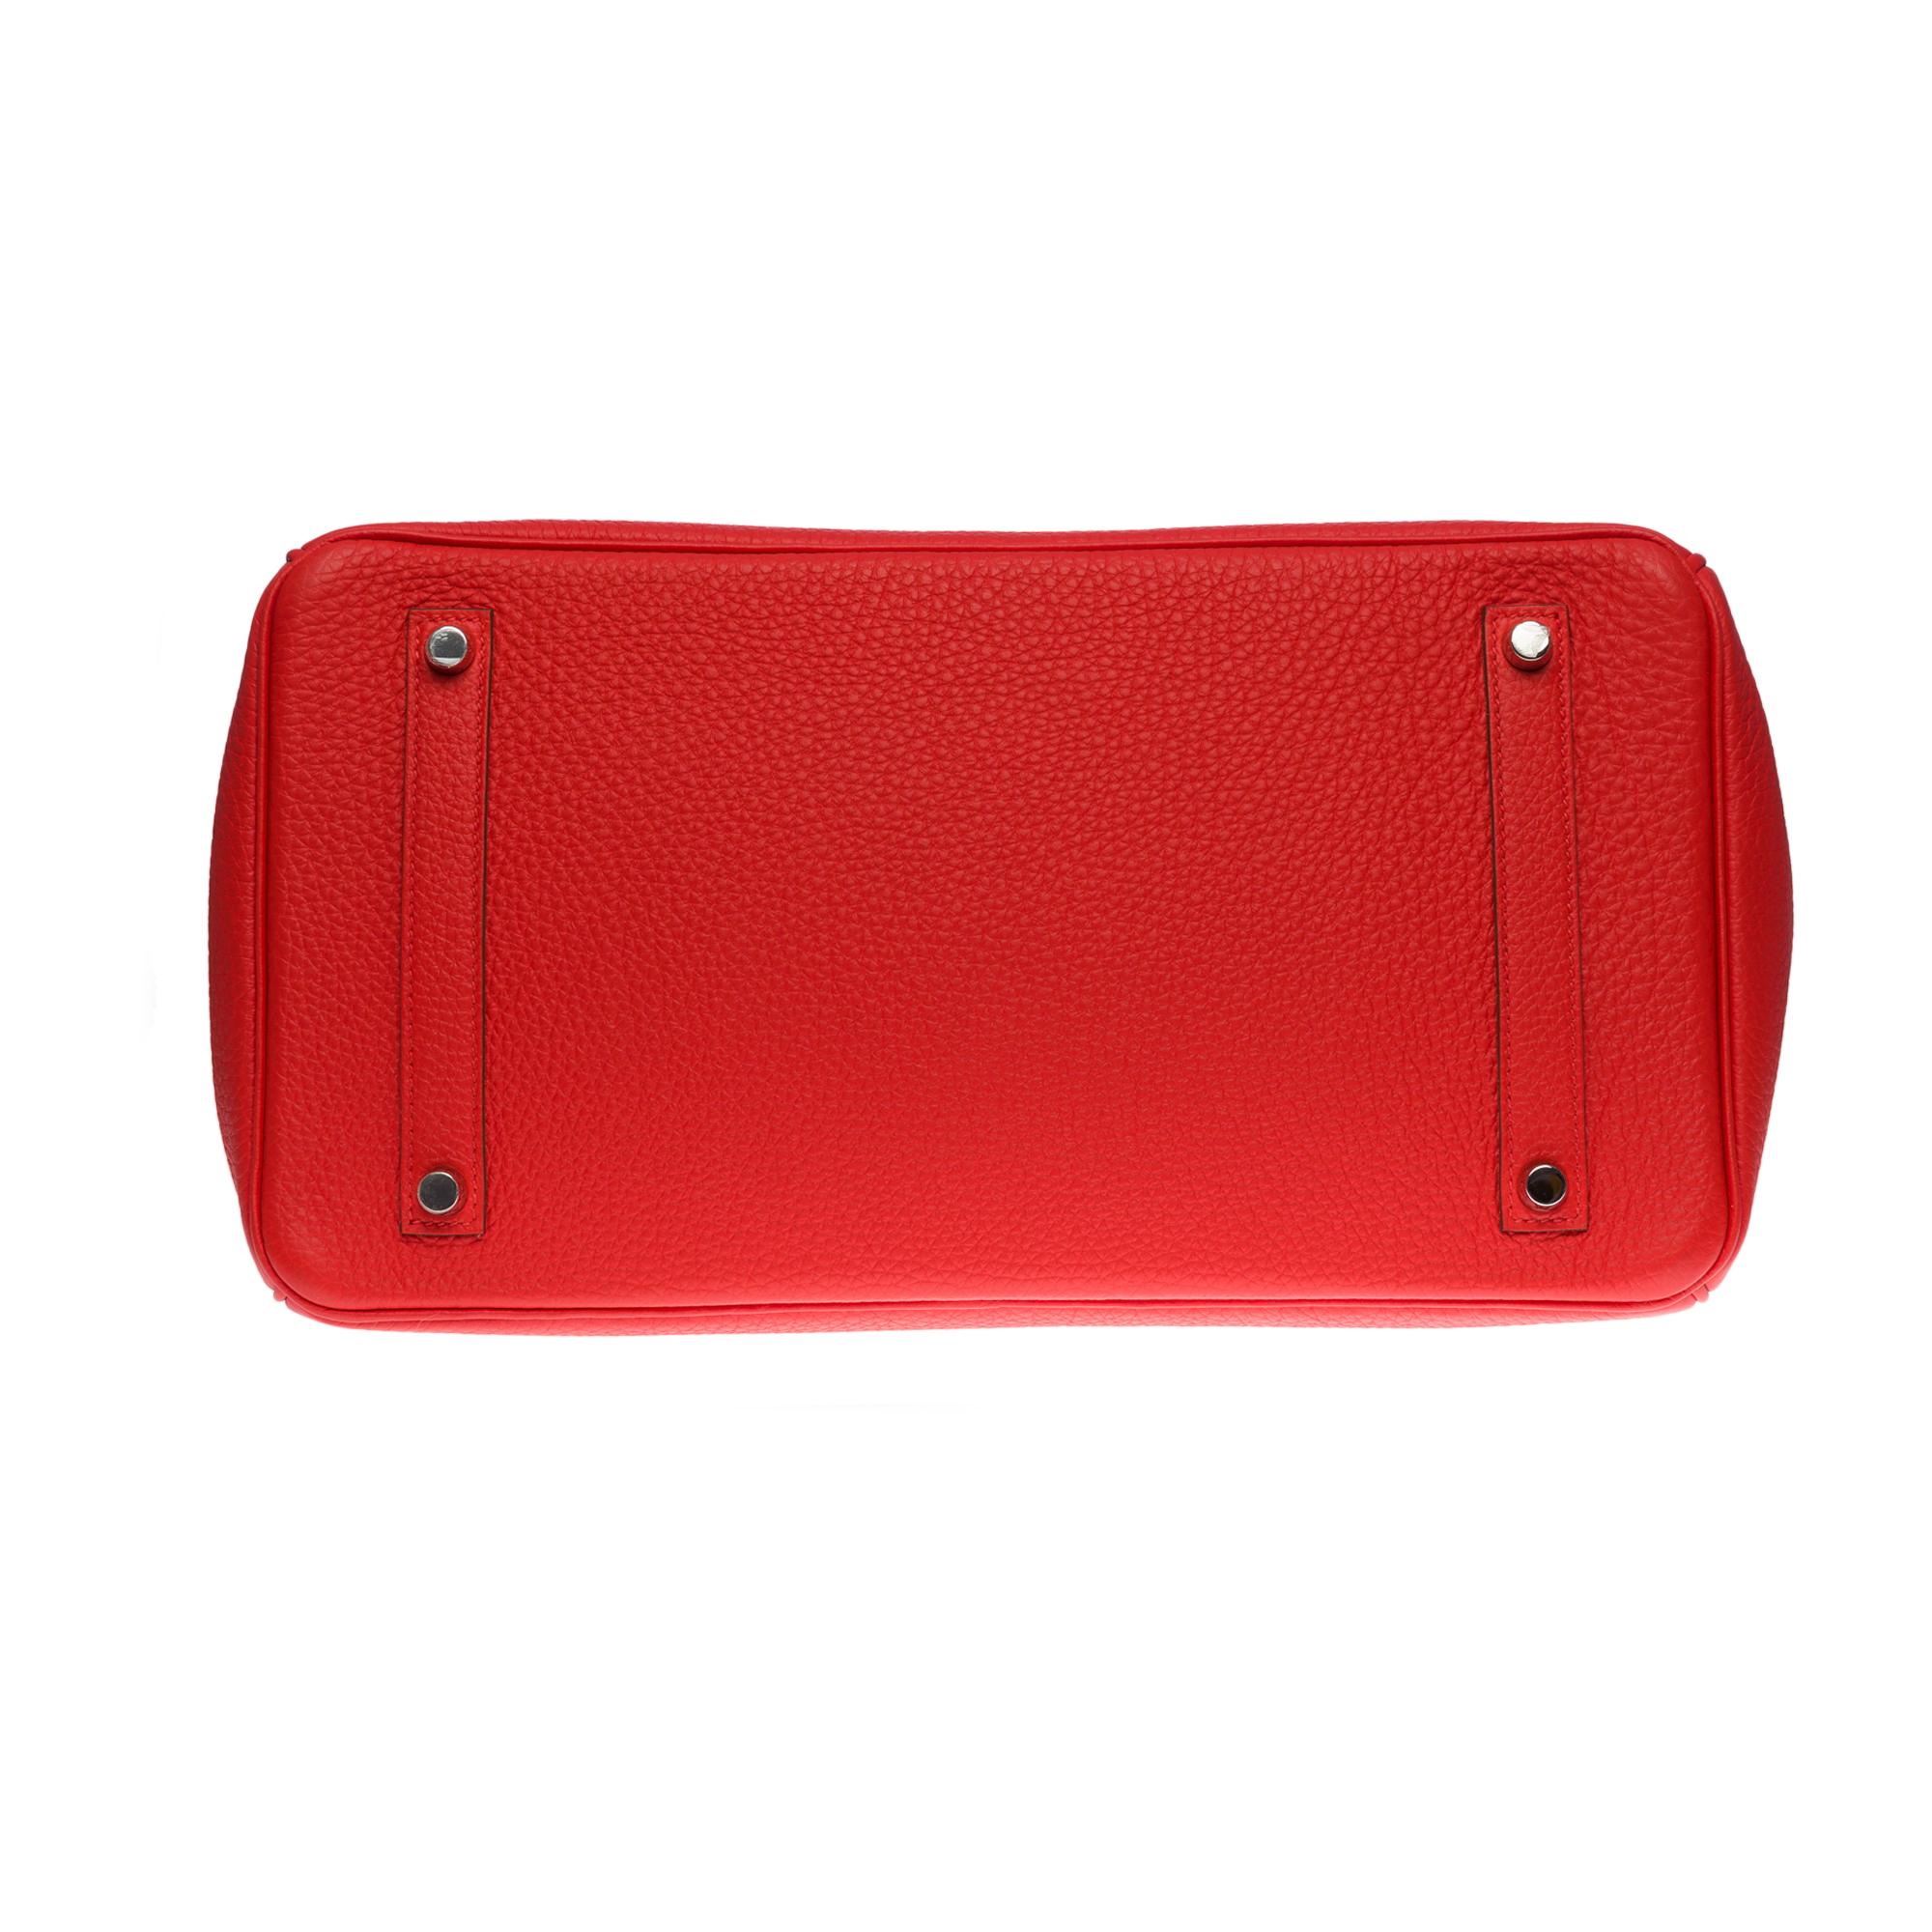 Almost New Hermès Birkin 35 handbag in Orange Poppy Togo leather, SHW For Sale 5